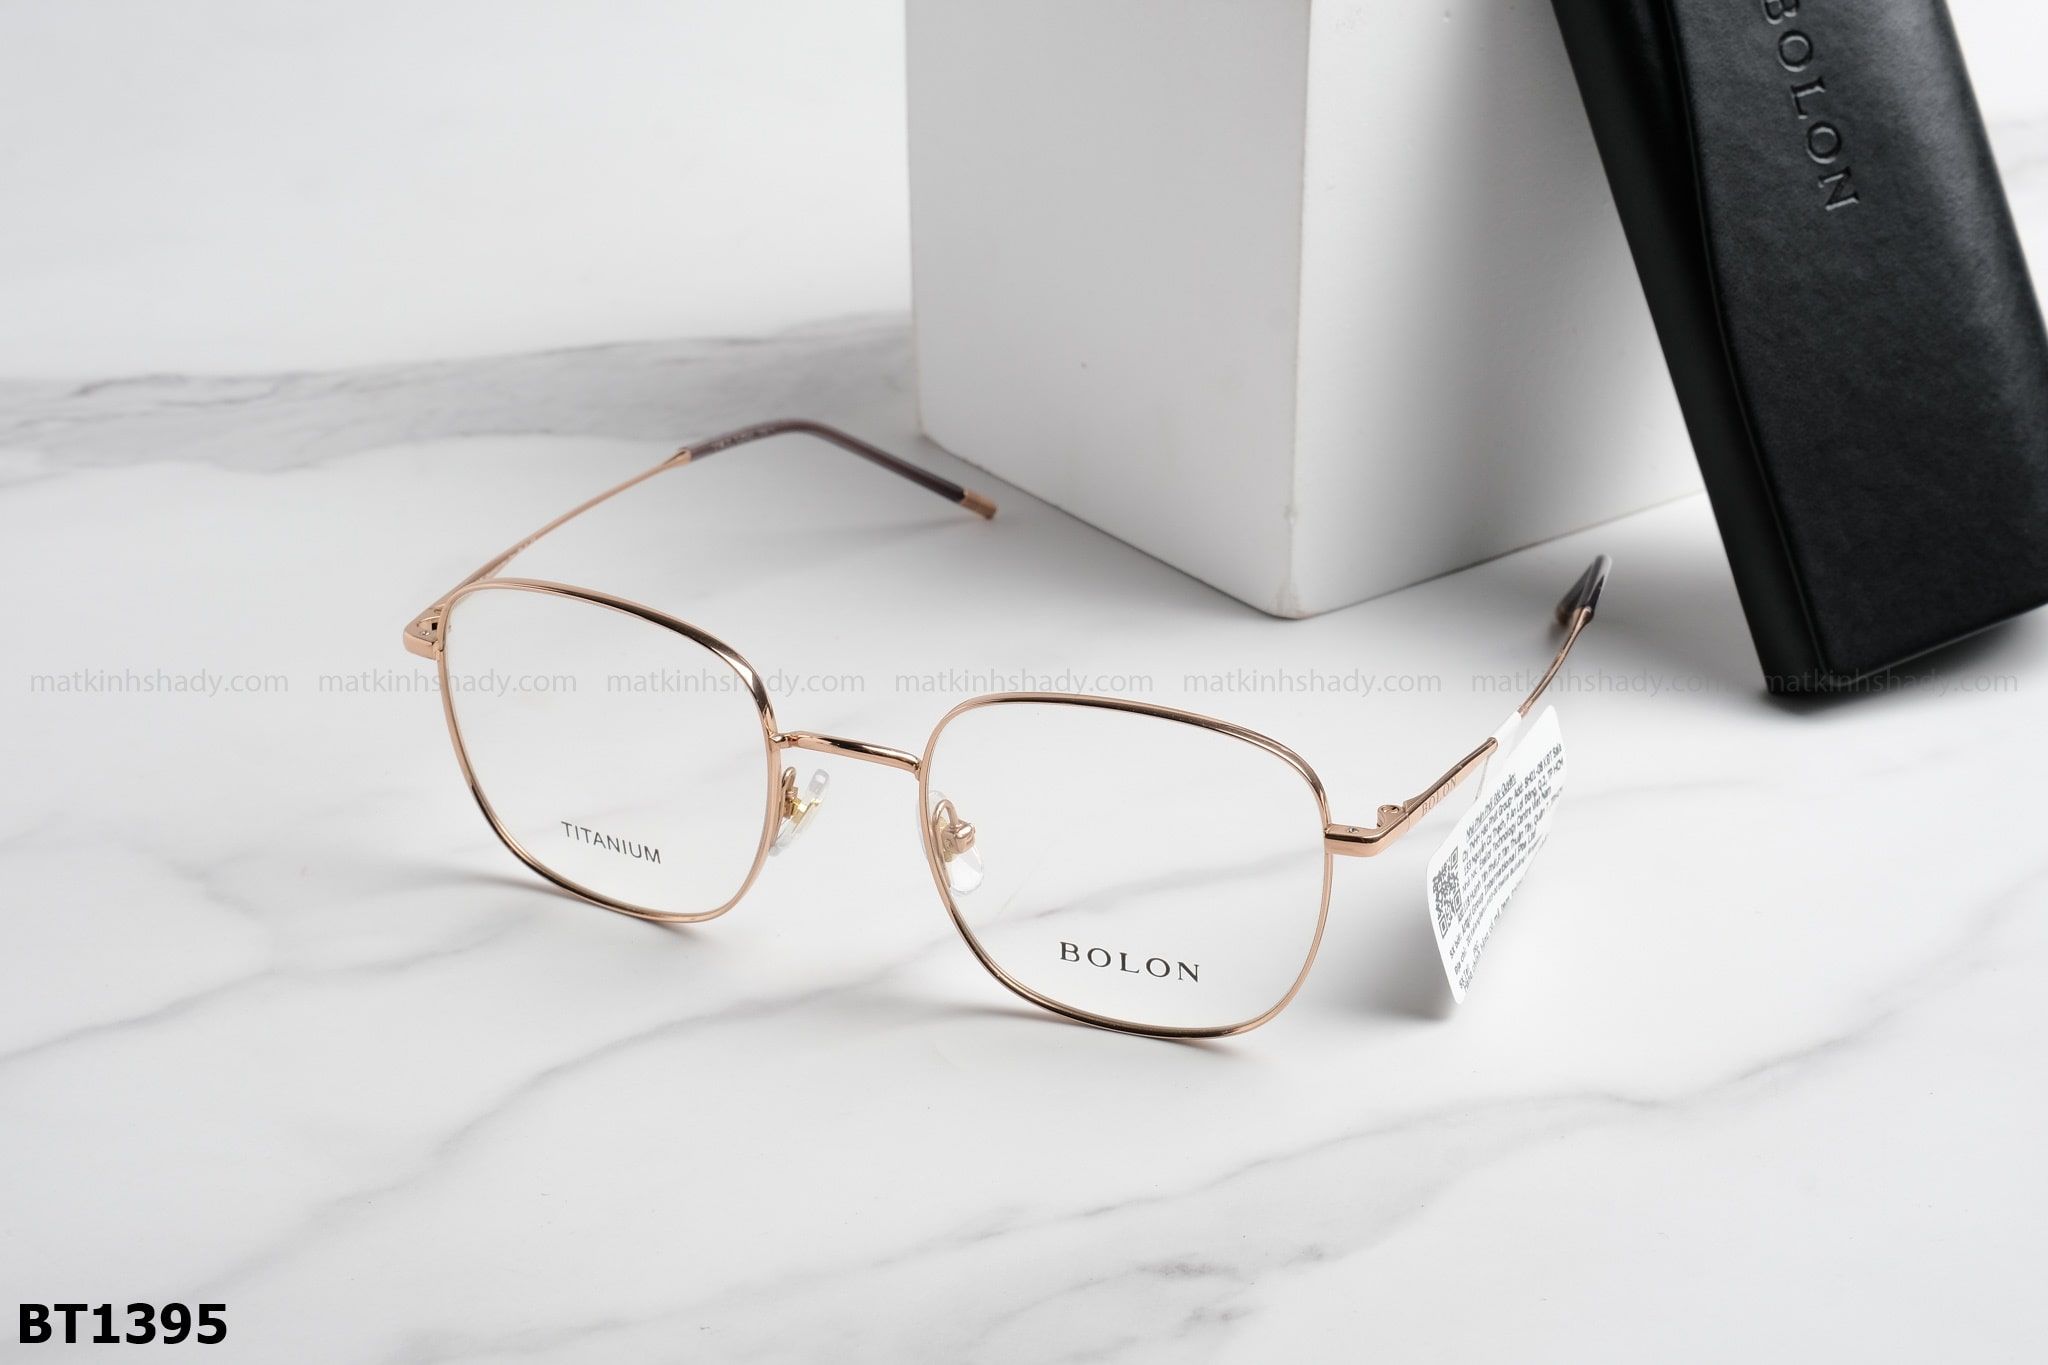  Bolon Eyewear - Glasses - BT1395 